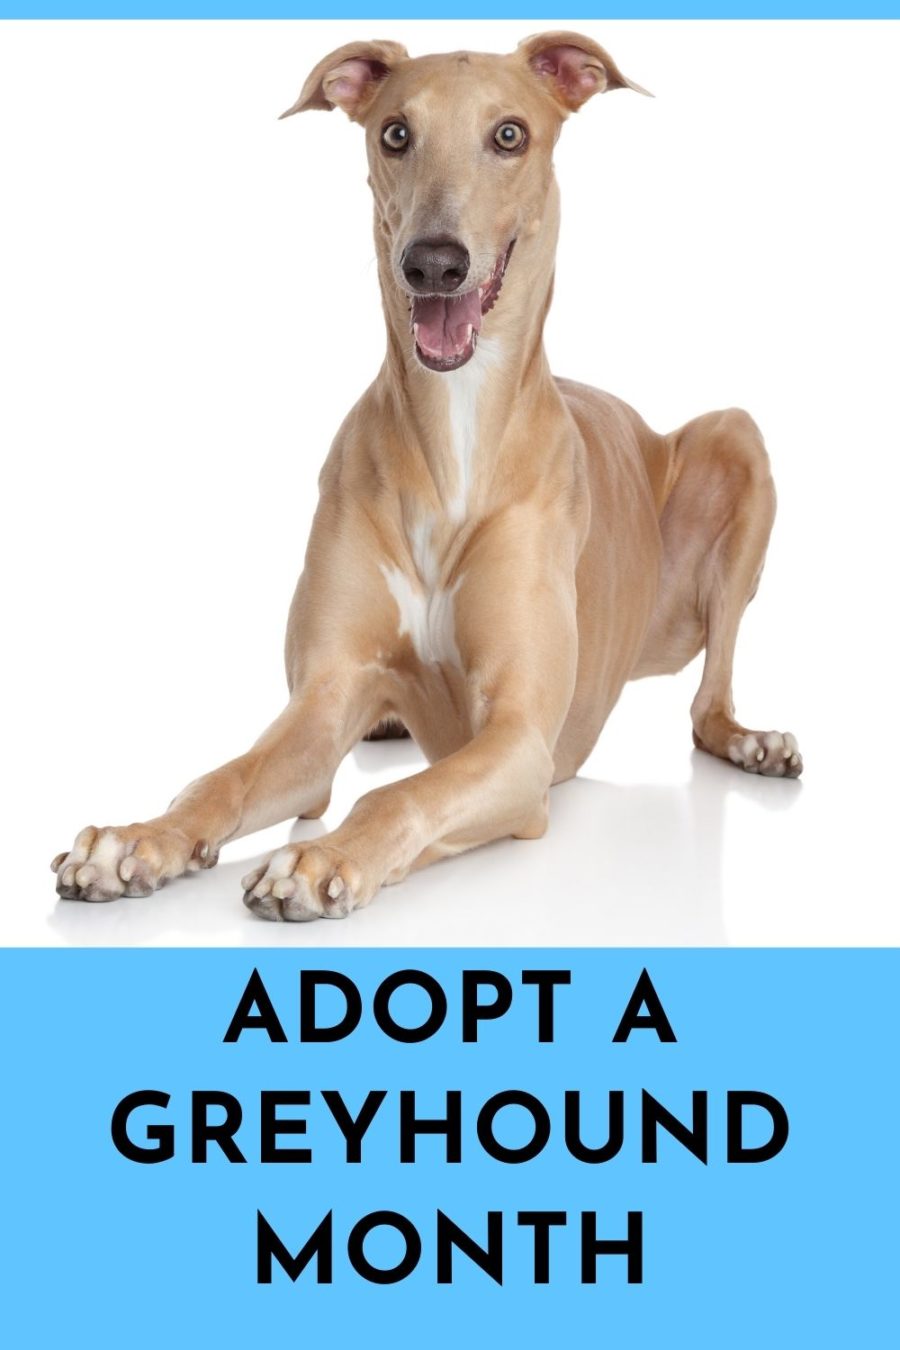 National Adopt-a-Greyhound Month